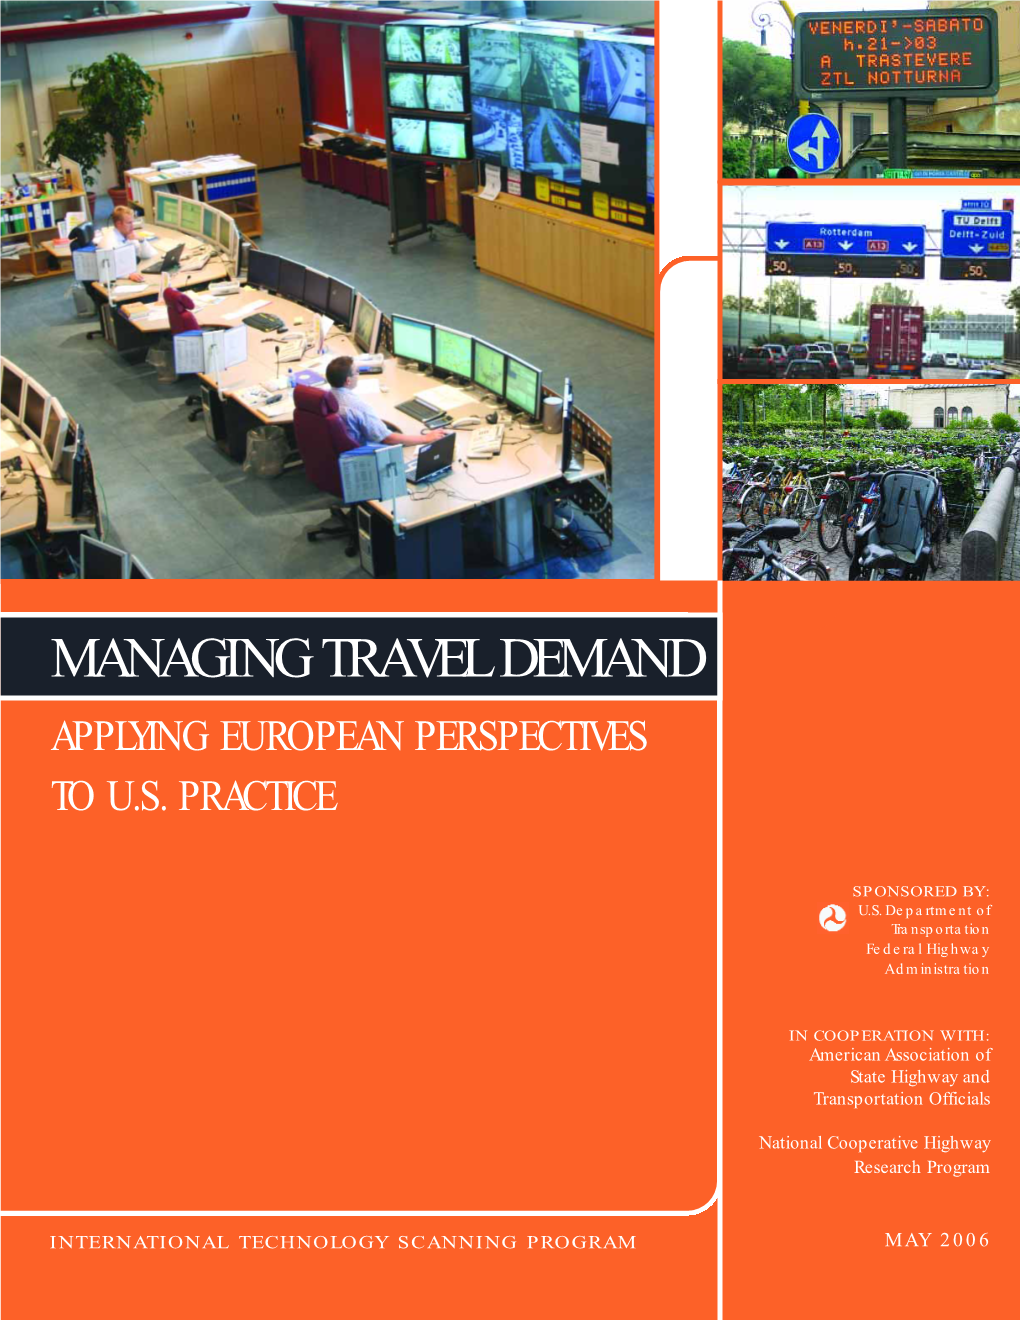 Managing Travel Demand Applying European Perspectives to U.S